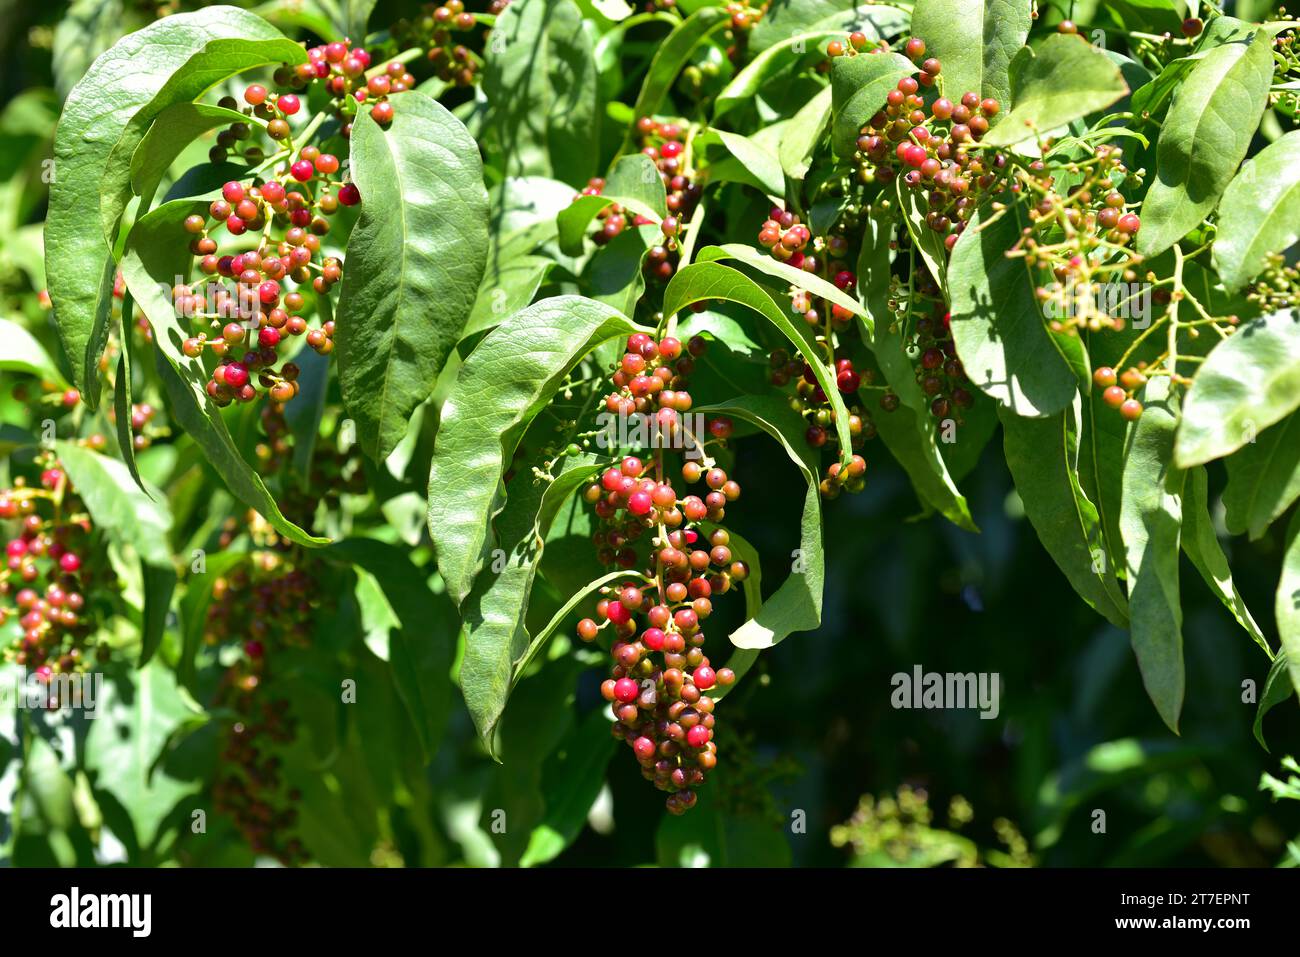 Hierbamora or hediondo (Bosea yervamora) is a medicinal shrub endemic to Canary Islands. Stock Photo